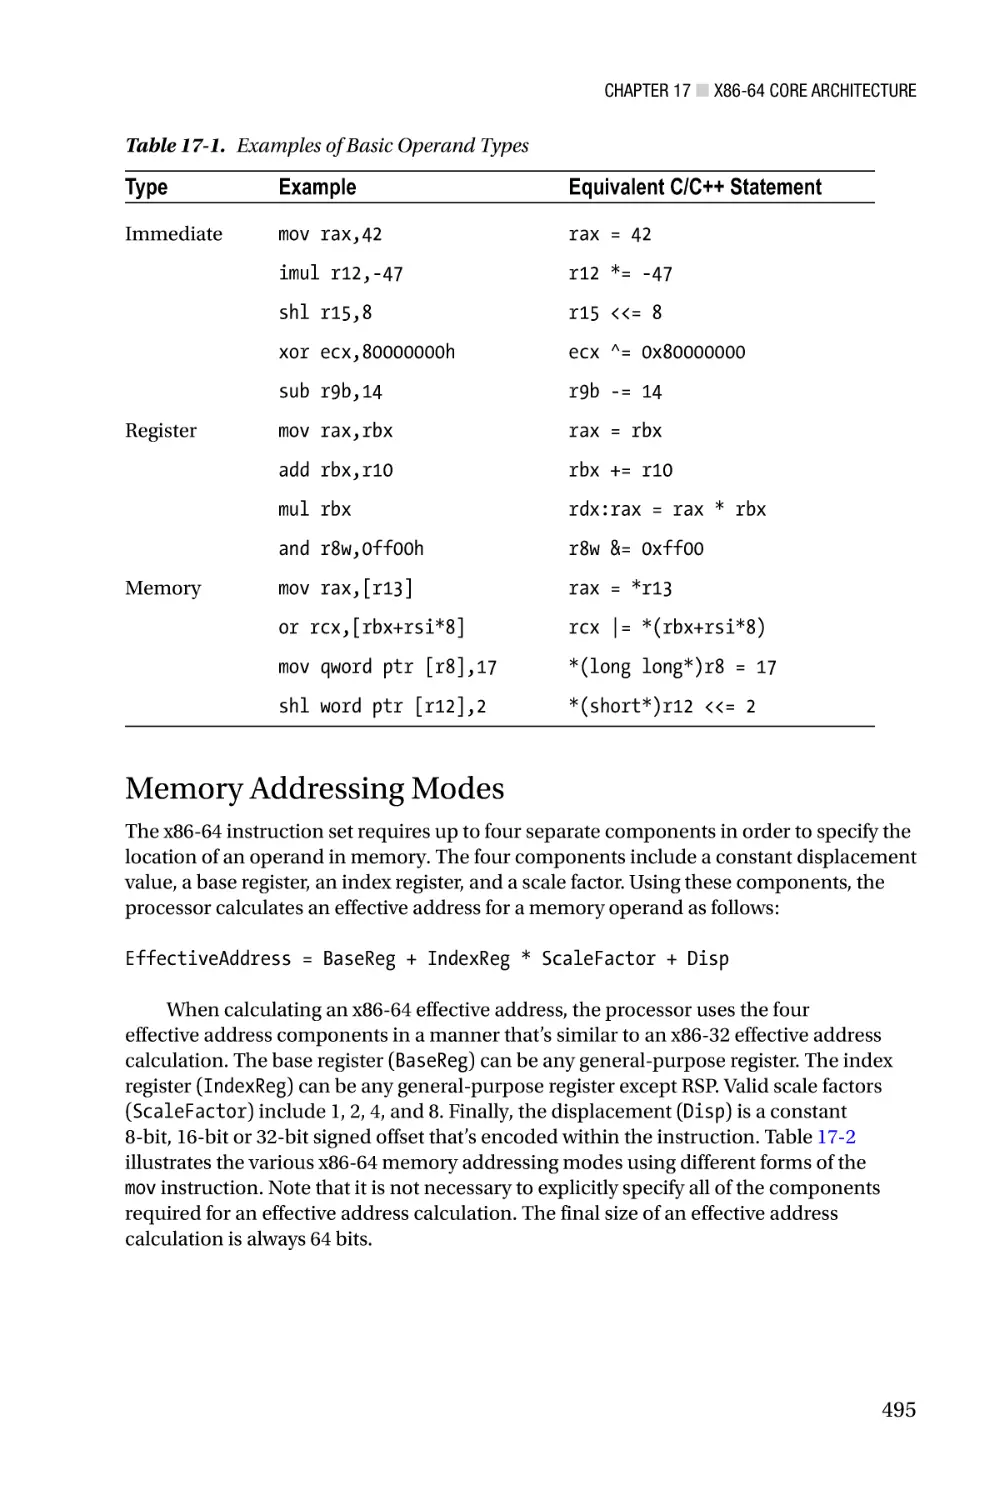 Memory Addressing Modes